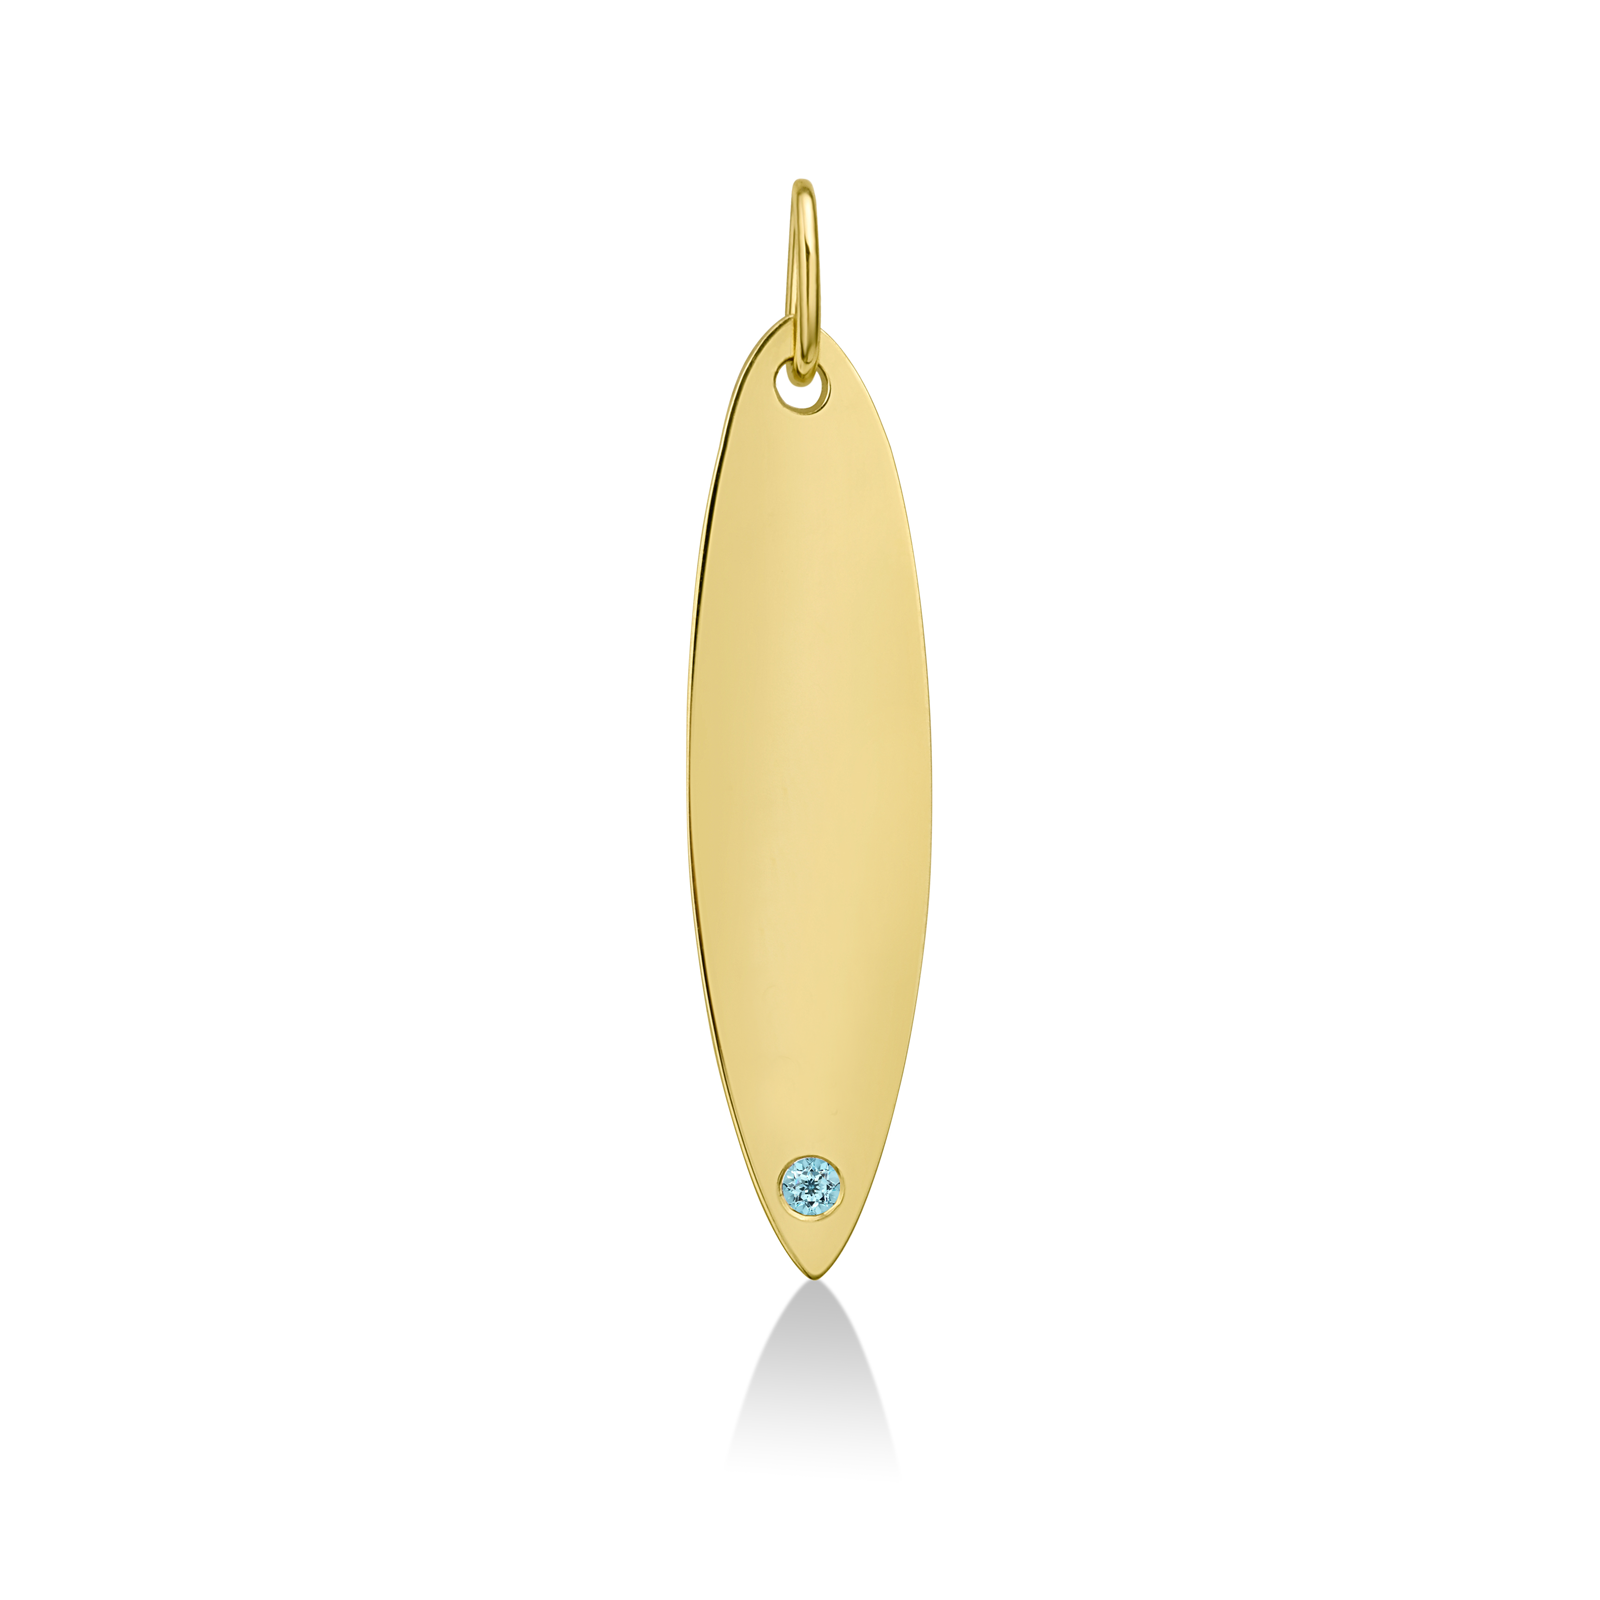 14k gold surfboard charm lock with aquamarine